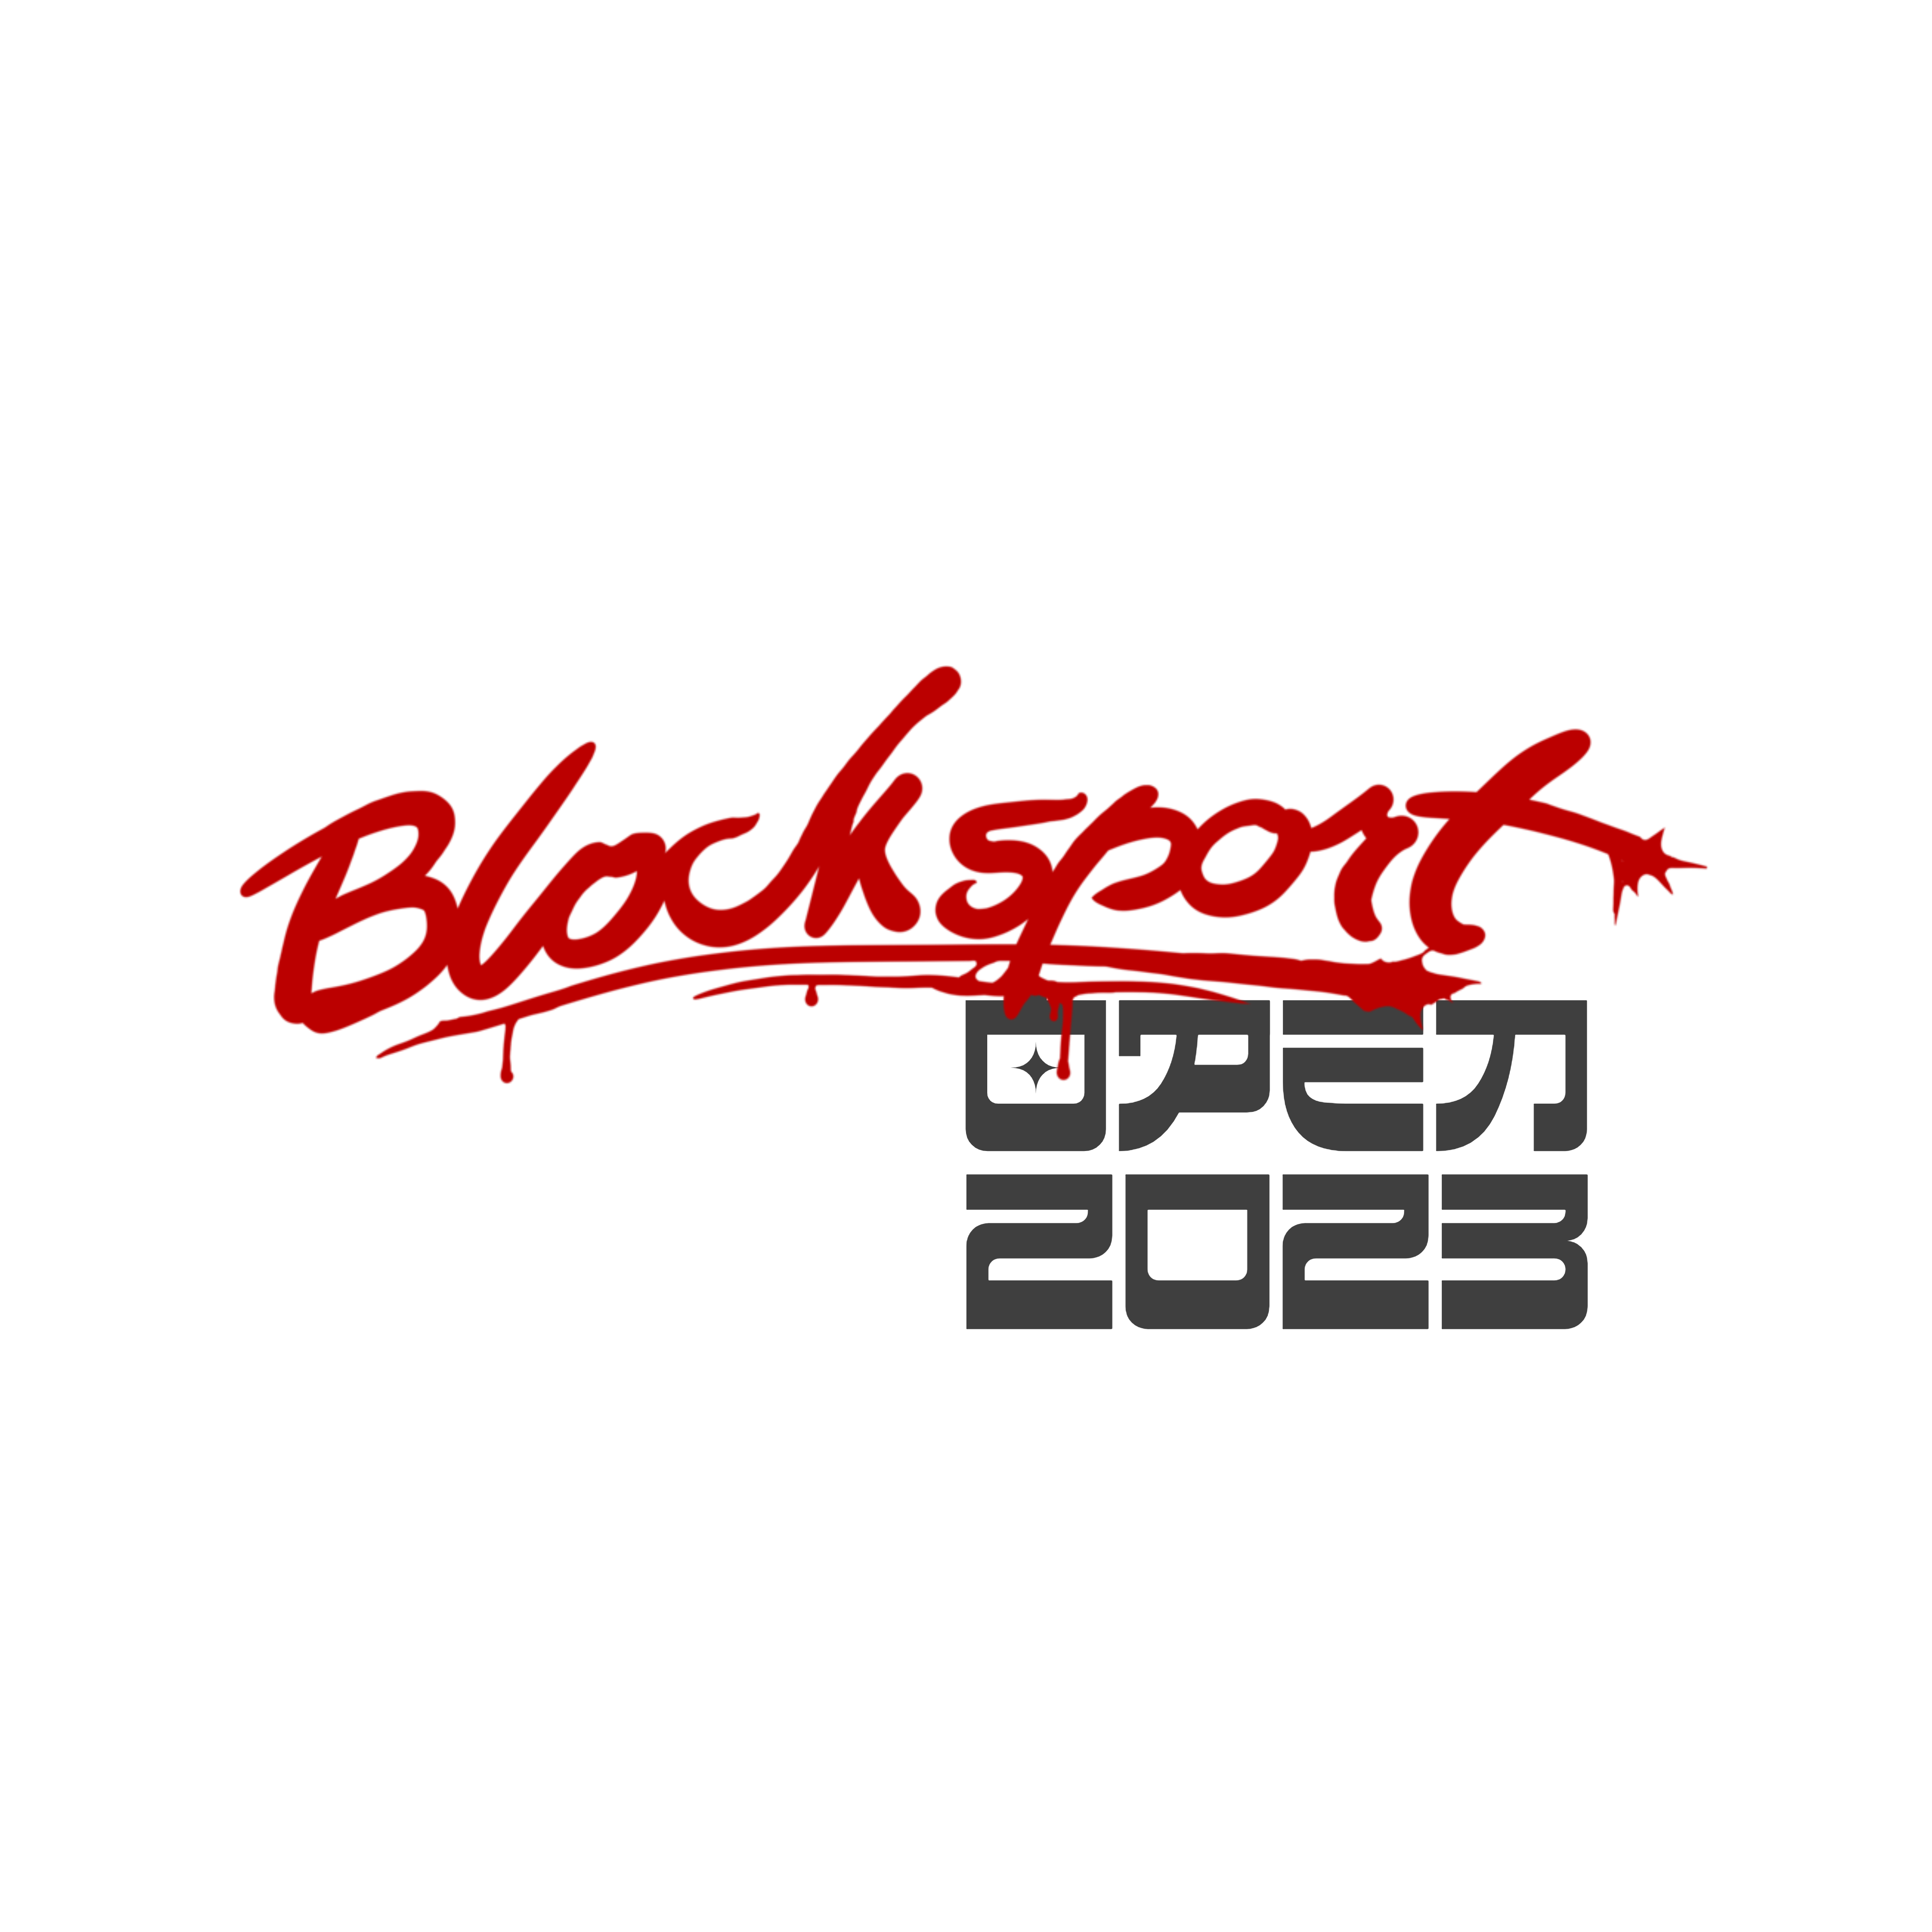 Blocksport Open